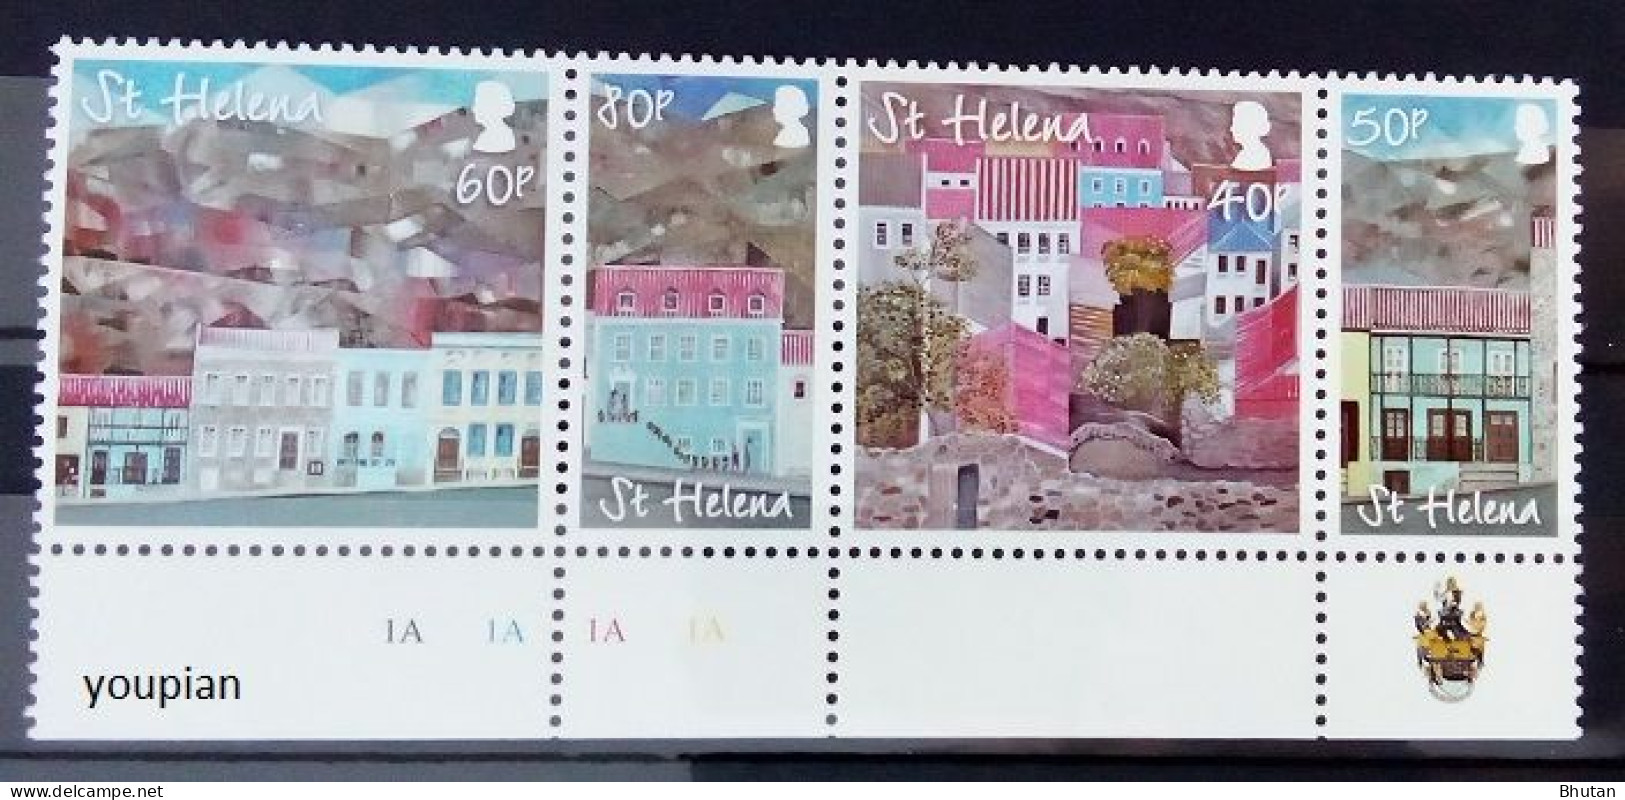 St. Helena 2015, Paintings Of The Capital Jamestown, MNH Stamps Strip - Saint Helena Island